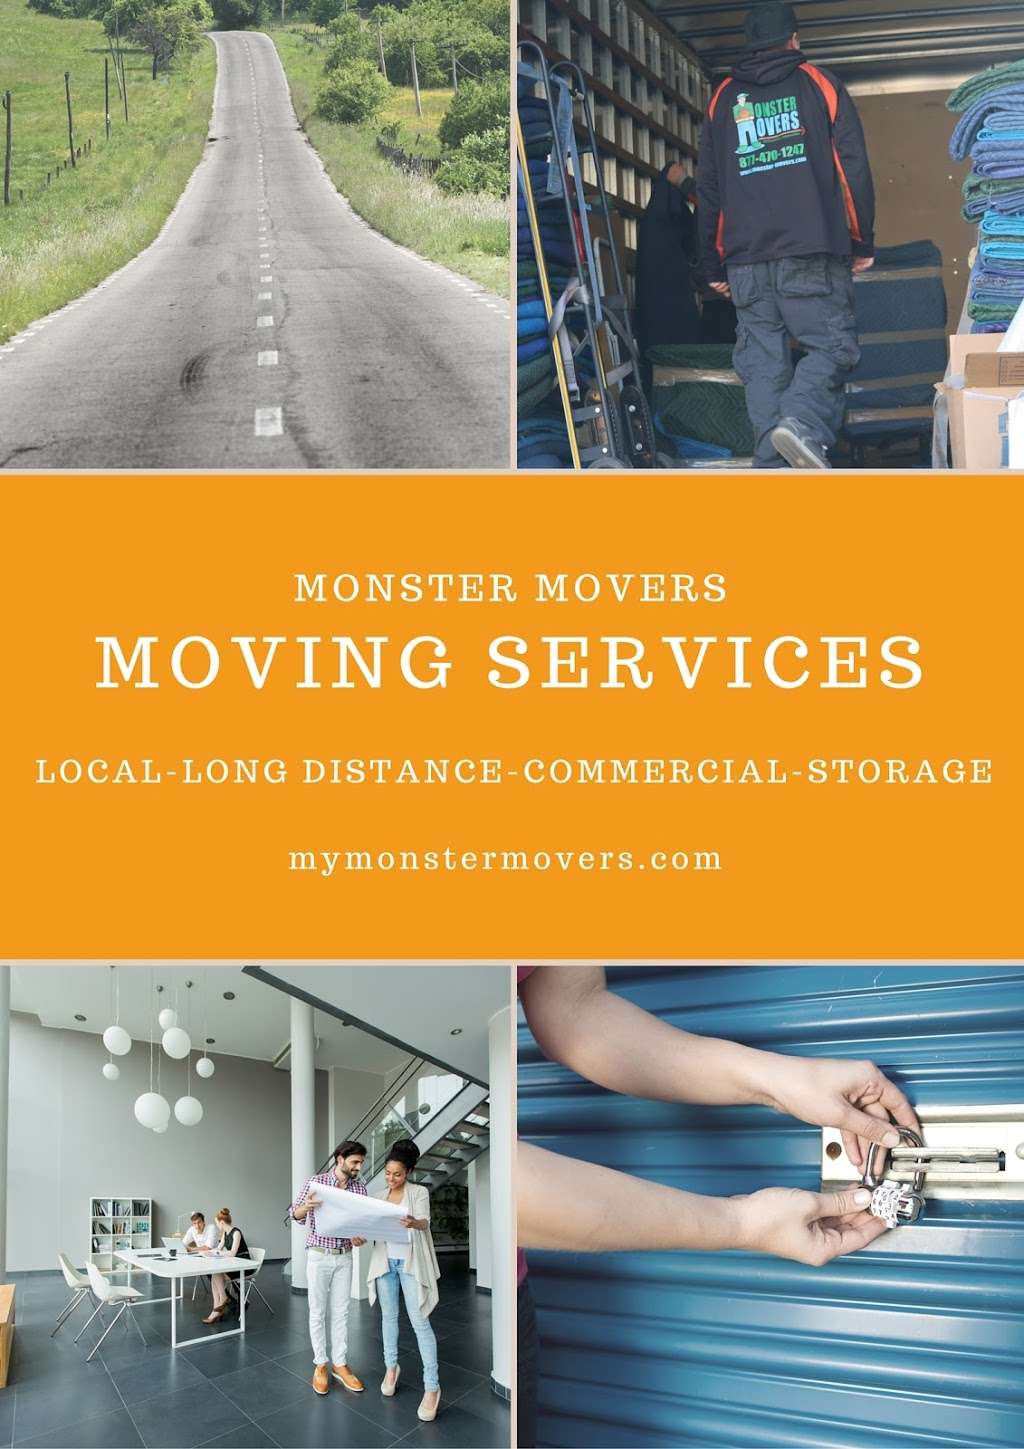 Monster Movers - Movers Near Me | 14 Wood Rd, Braintree, MA 02184, USA | Phone: (877) 470-1247